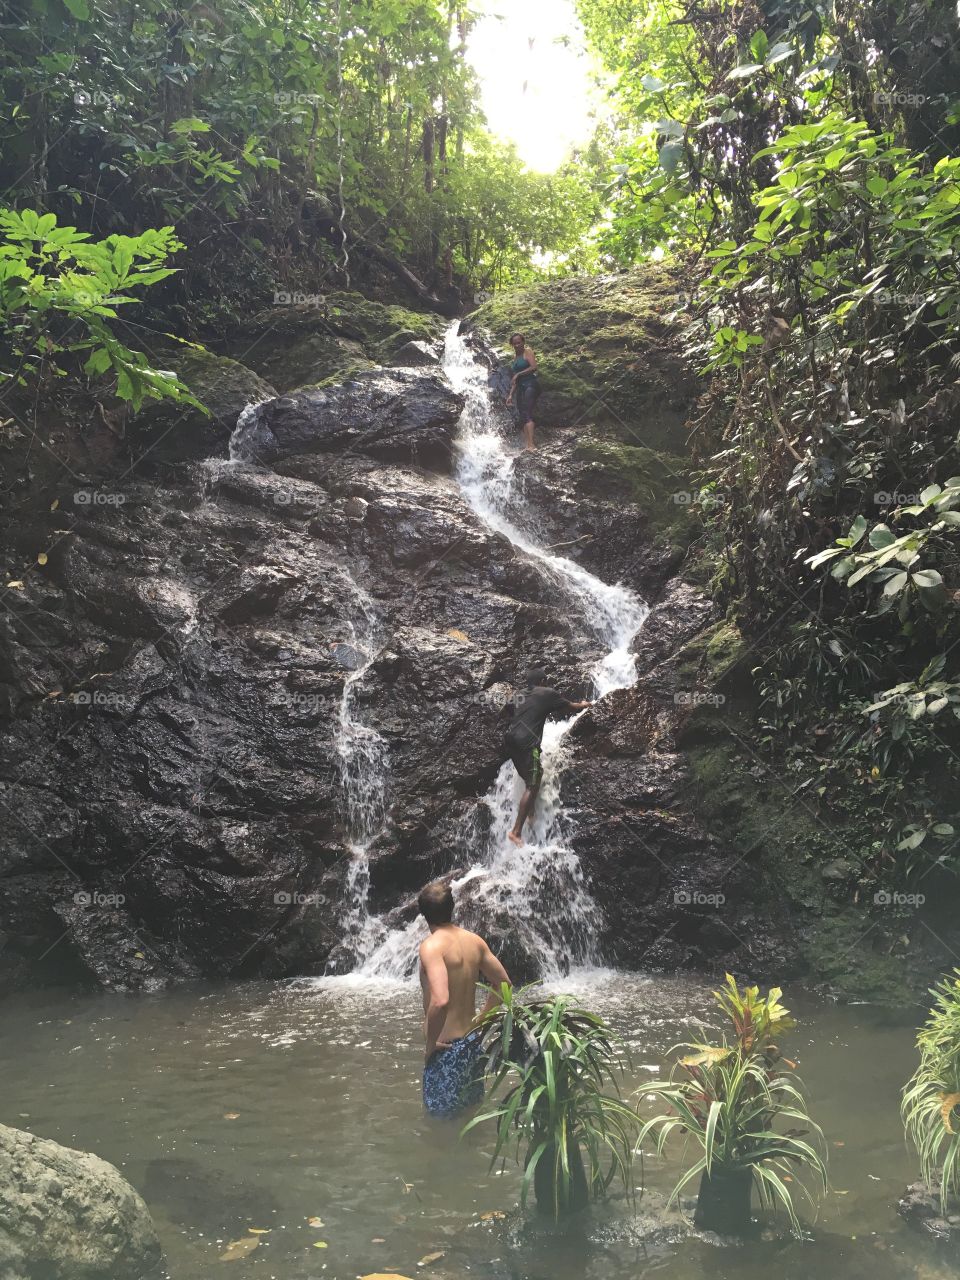 Chasing Waterfalls in Fiji
Savusavu, Fiji 